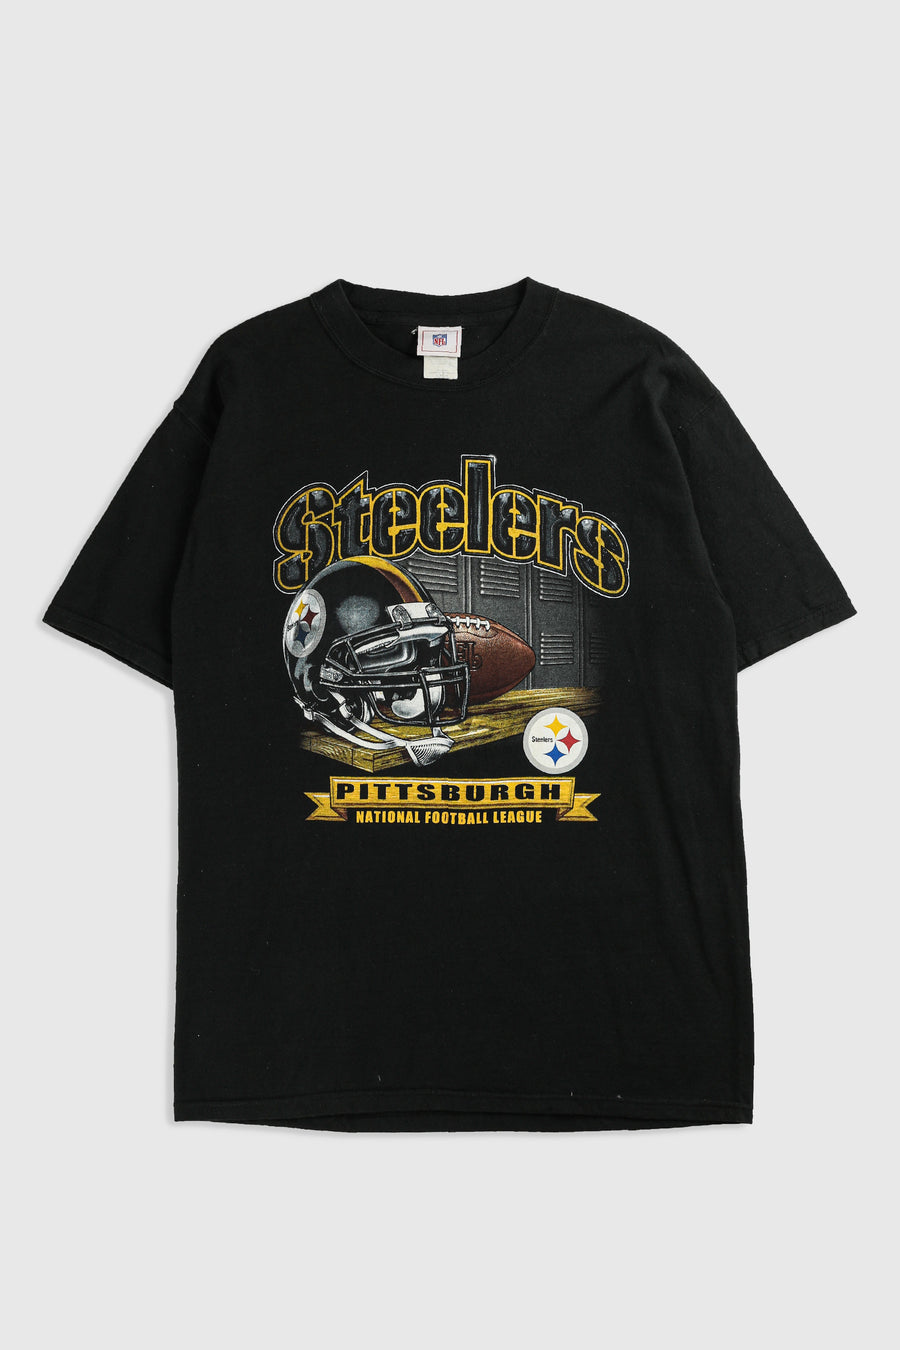 Vintage Steelers NFL Tee